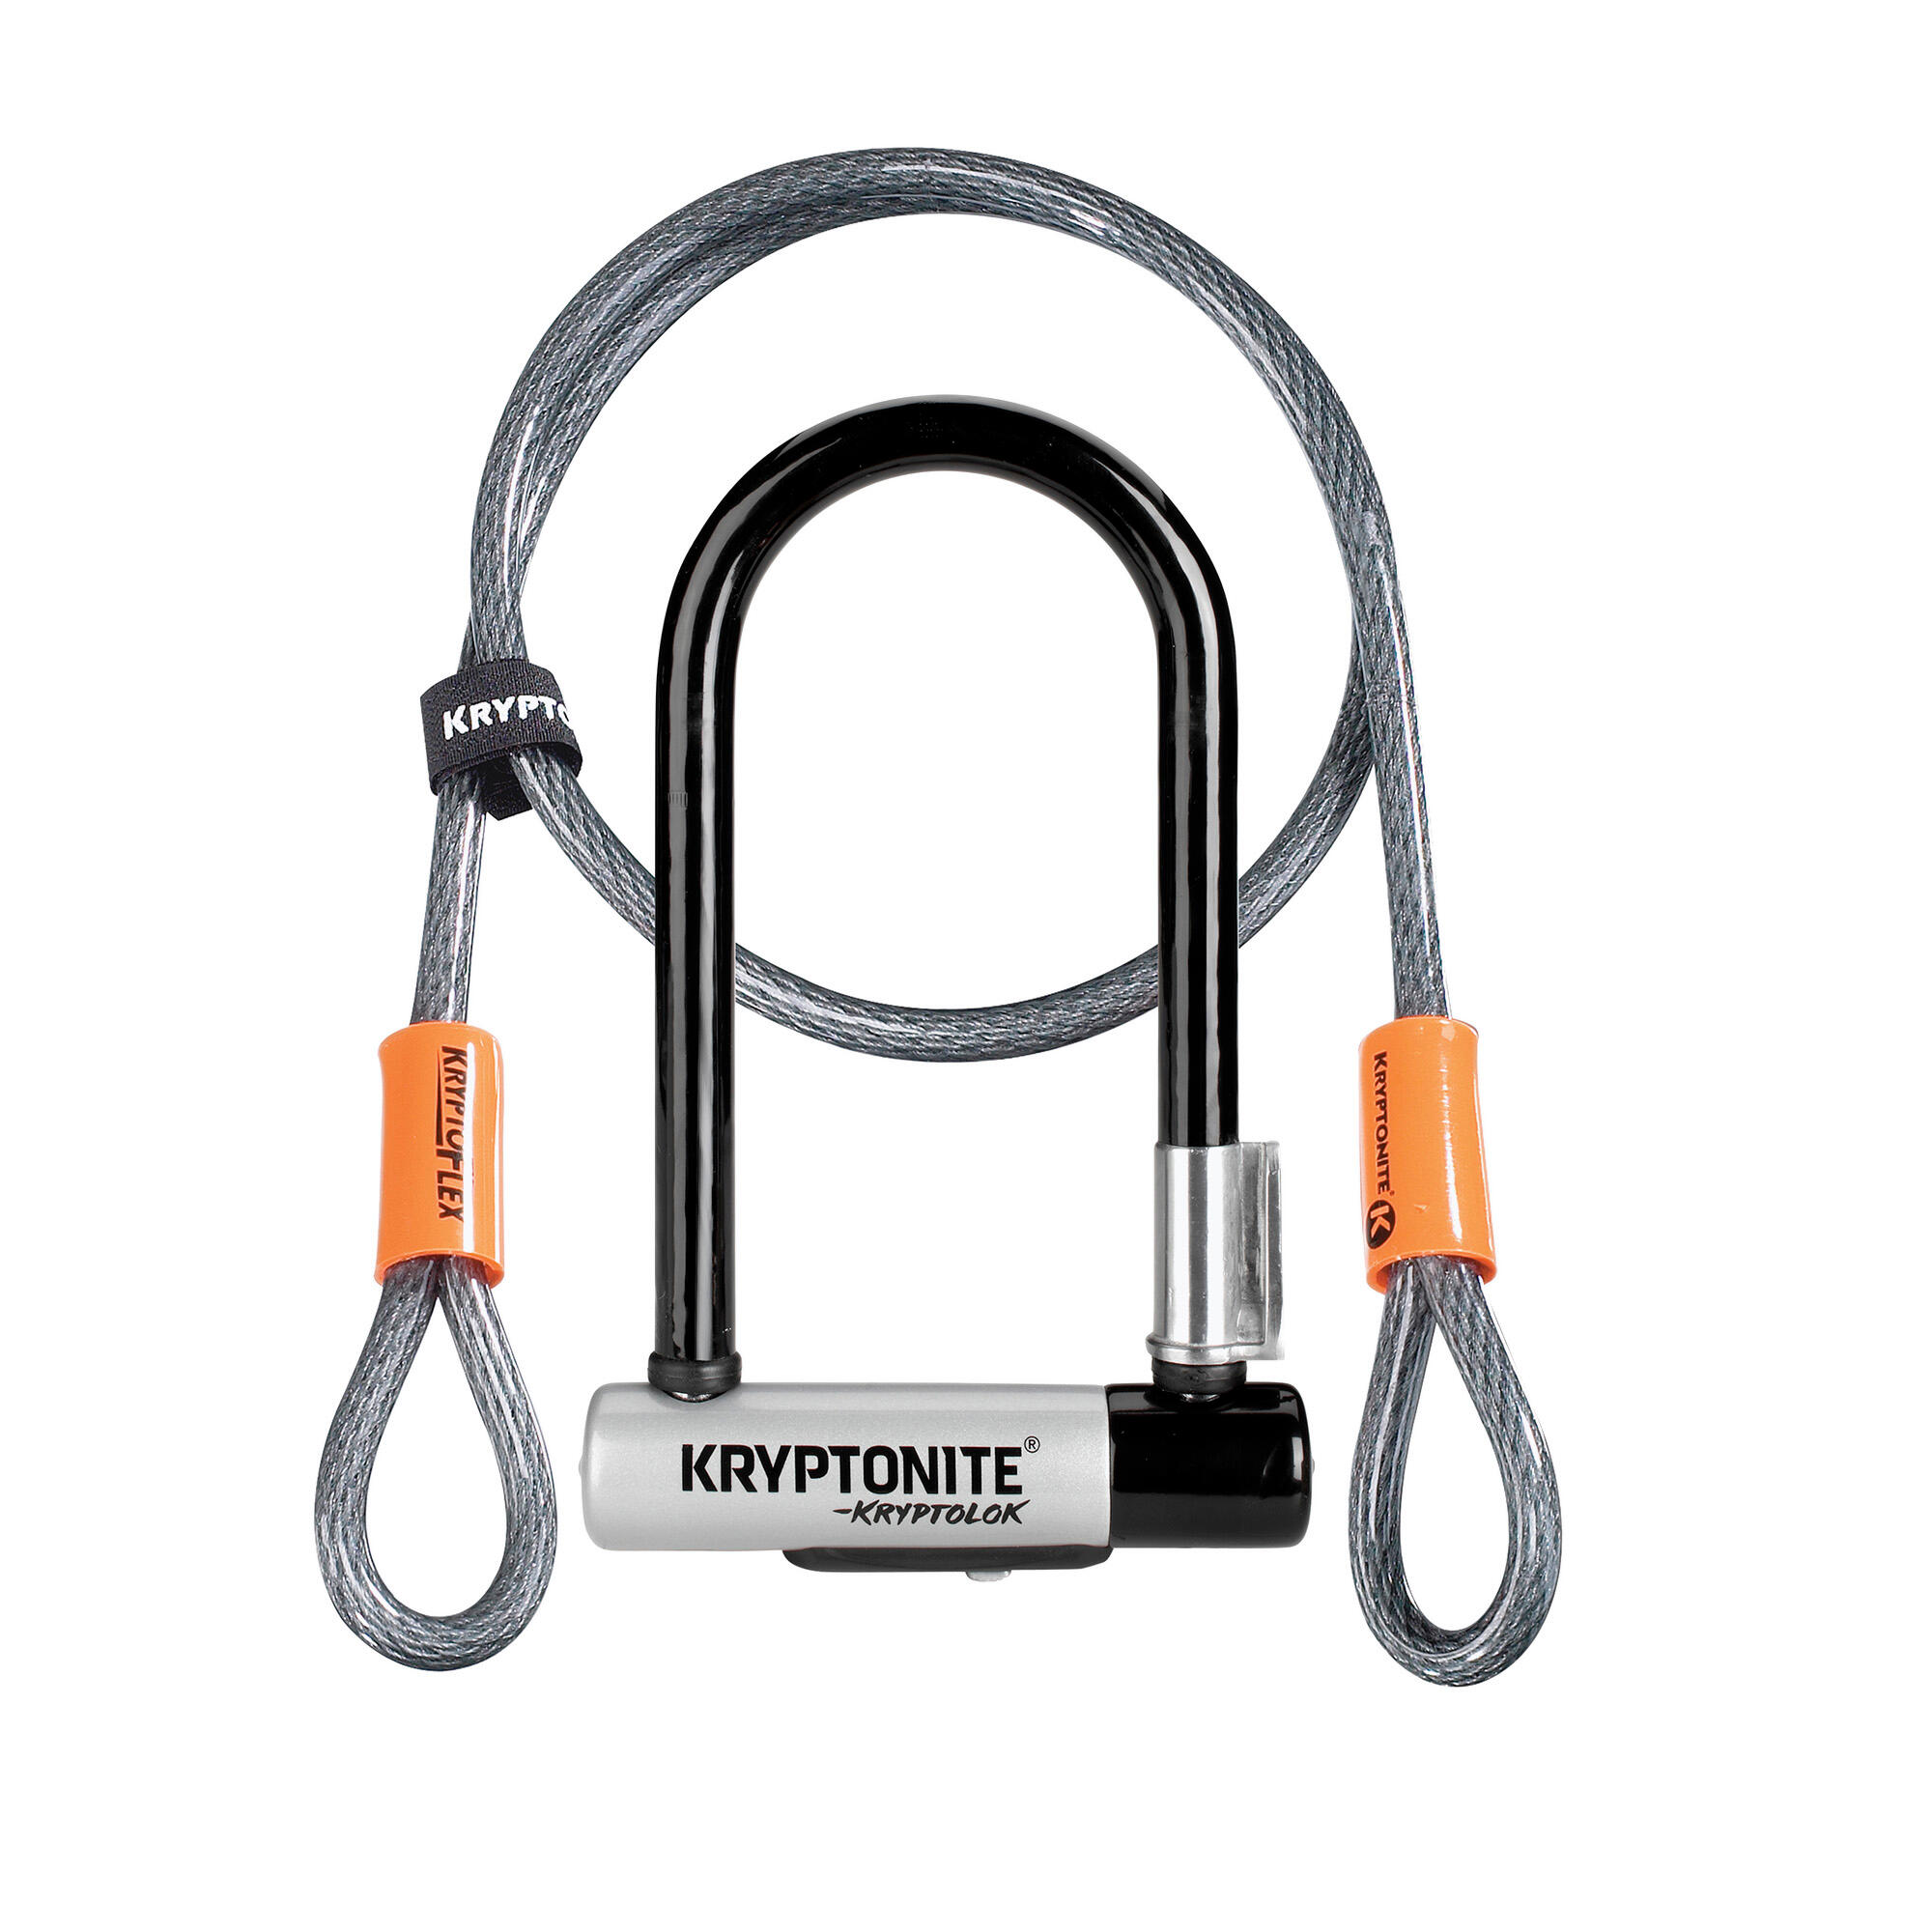 KRYPTONITE Kryptonite Kryptolok Mini U-Lock With 4 Foot Flex and Flexframe Bracket